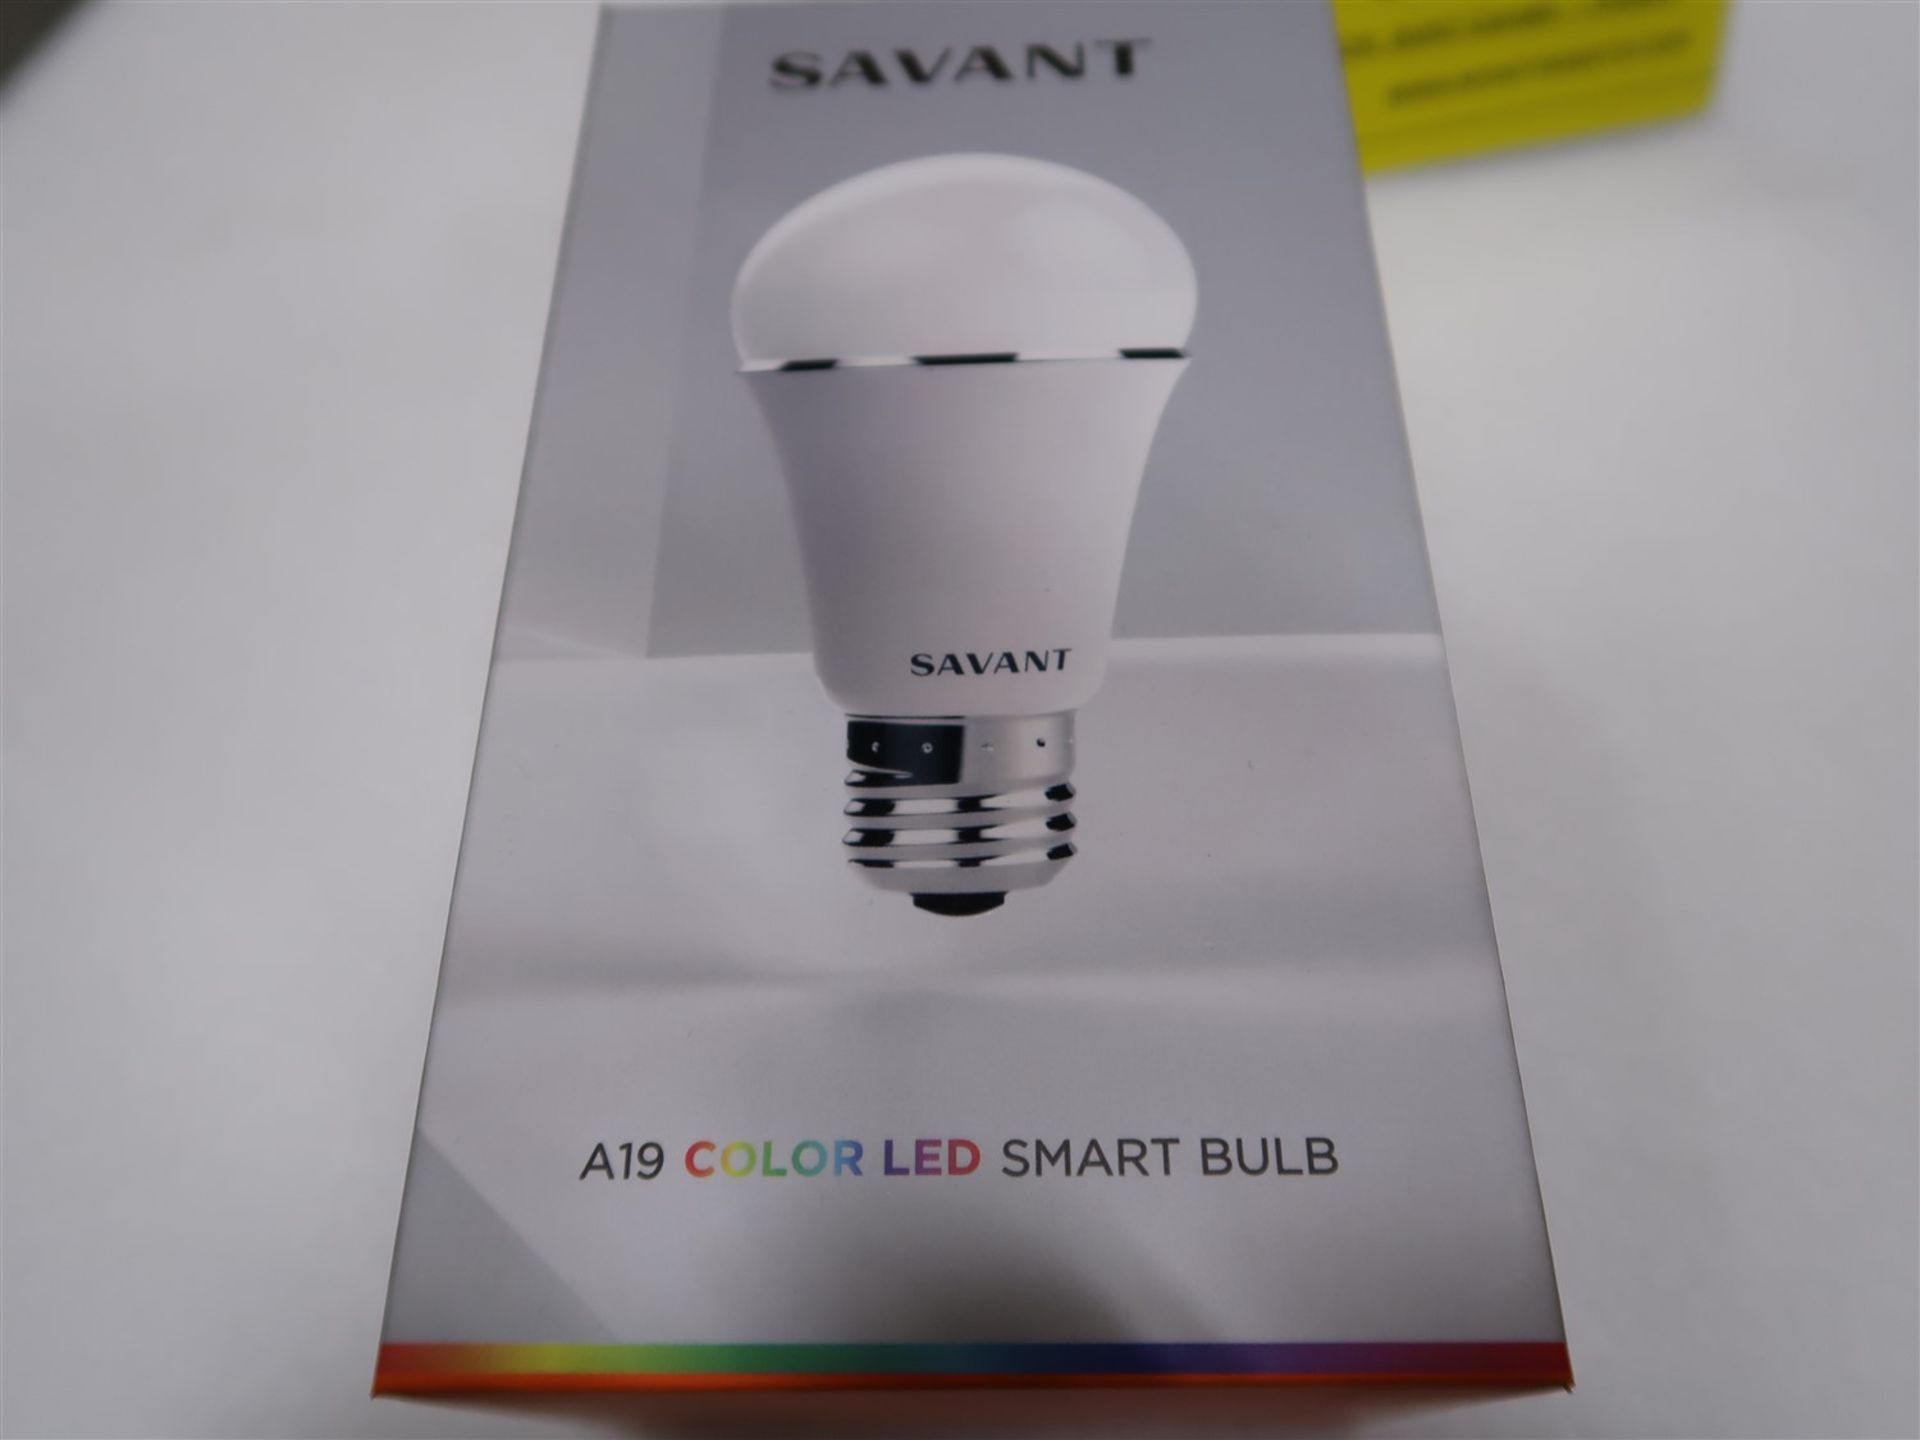 SAVANT A19 COLOR LED SMART BULB - Image 2 of 3